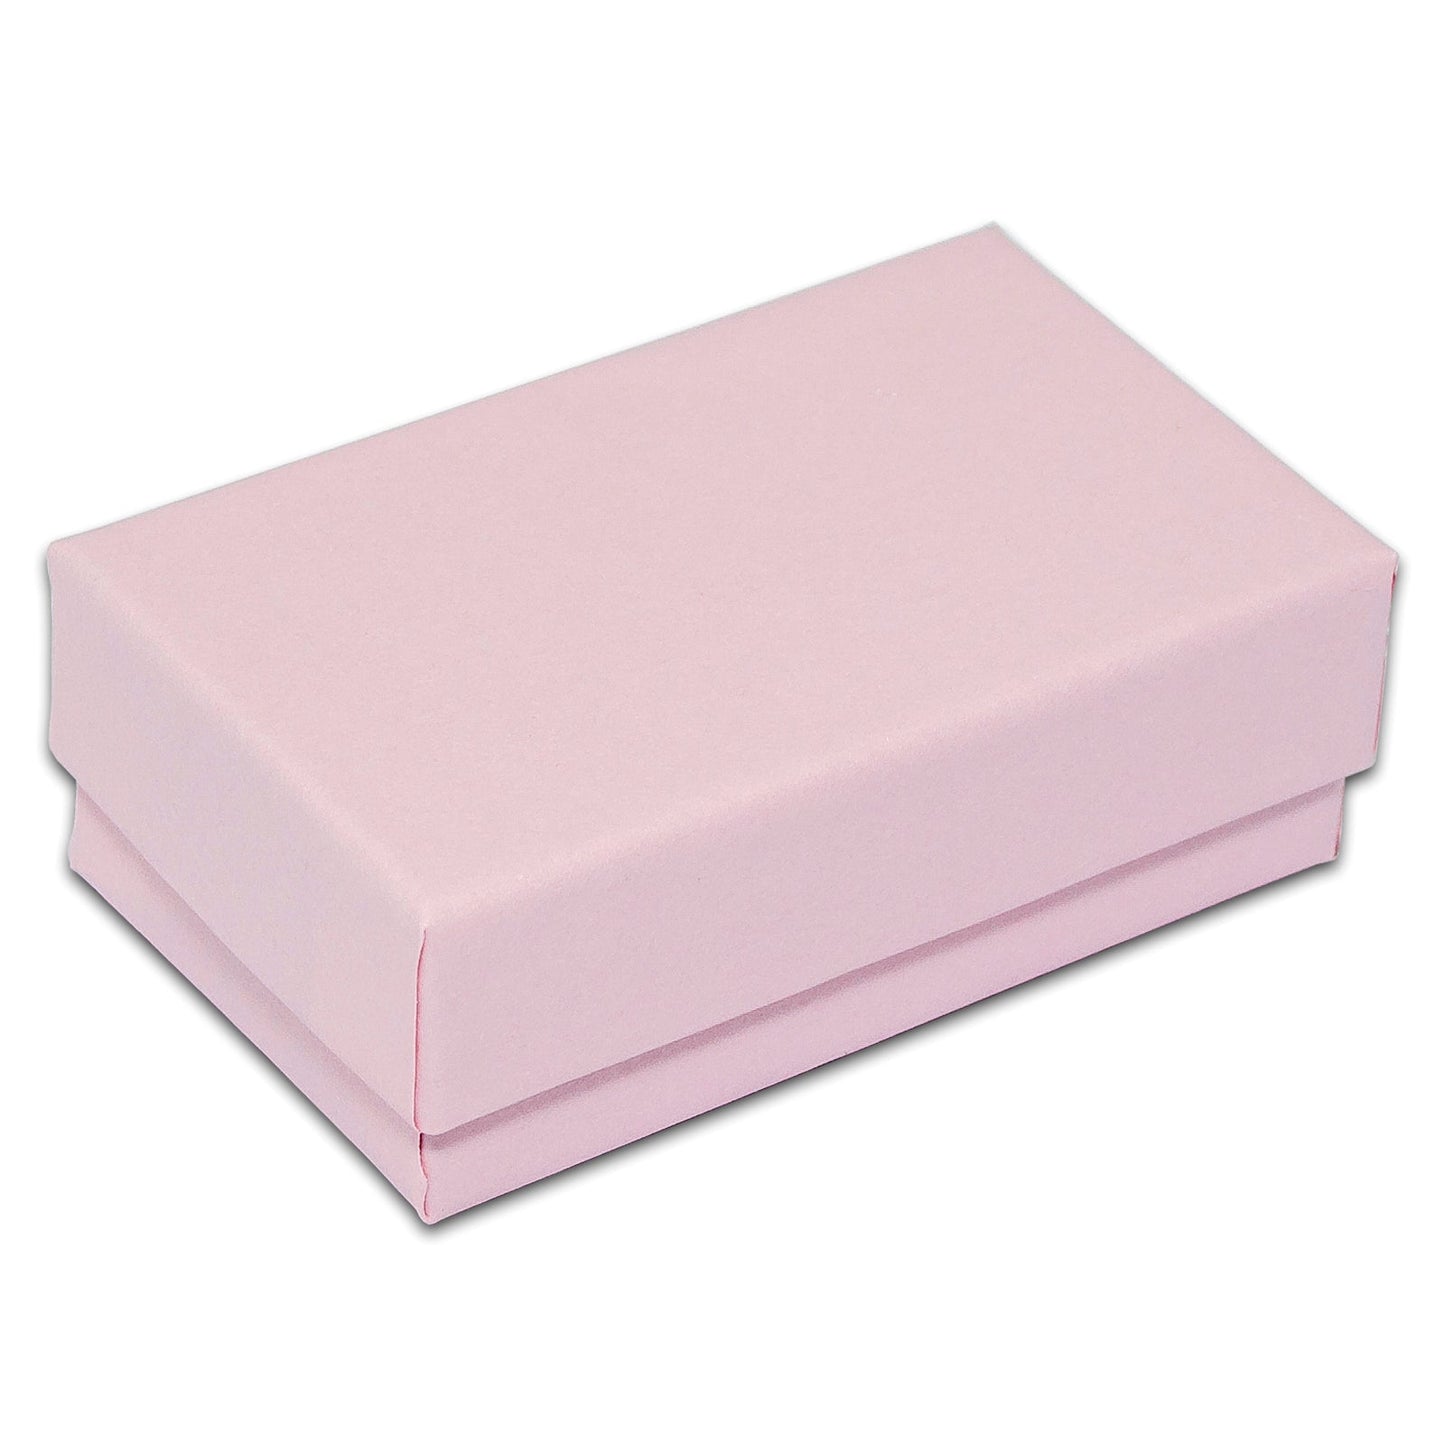 #21 - 2 5/8" x 1 1/2" x 1"H Pink Cotton Filled Box